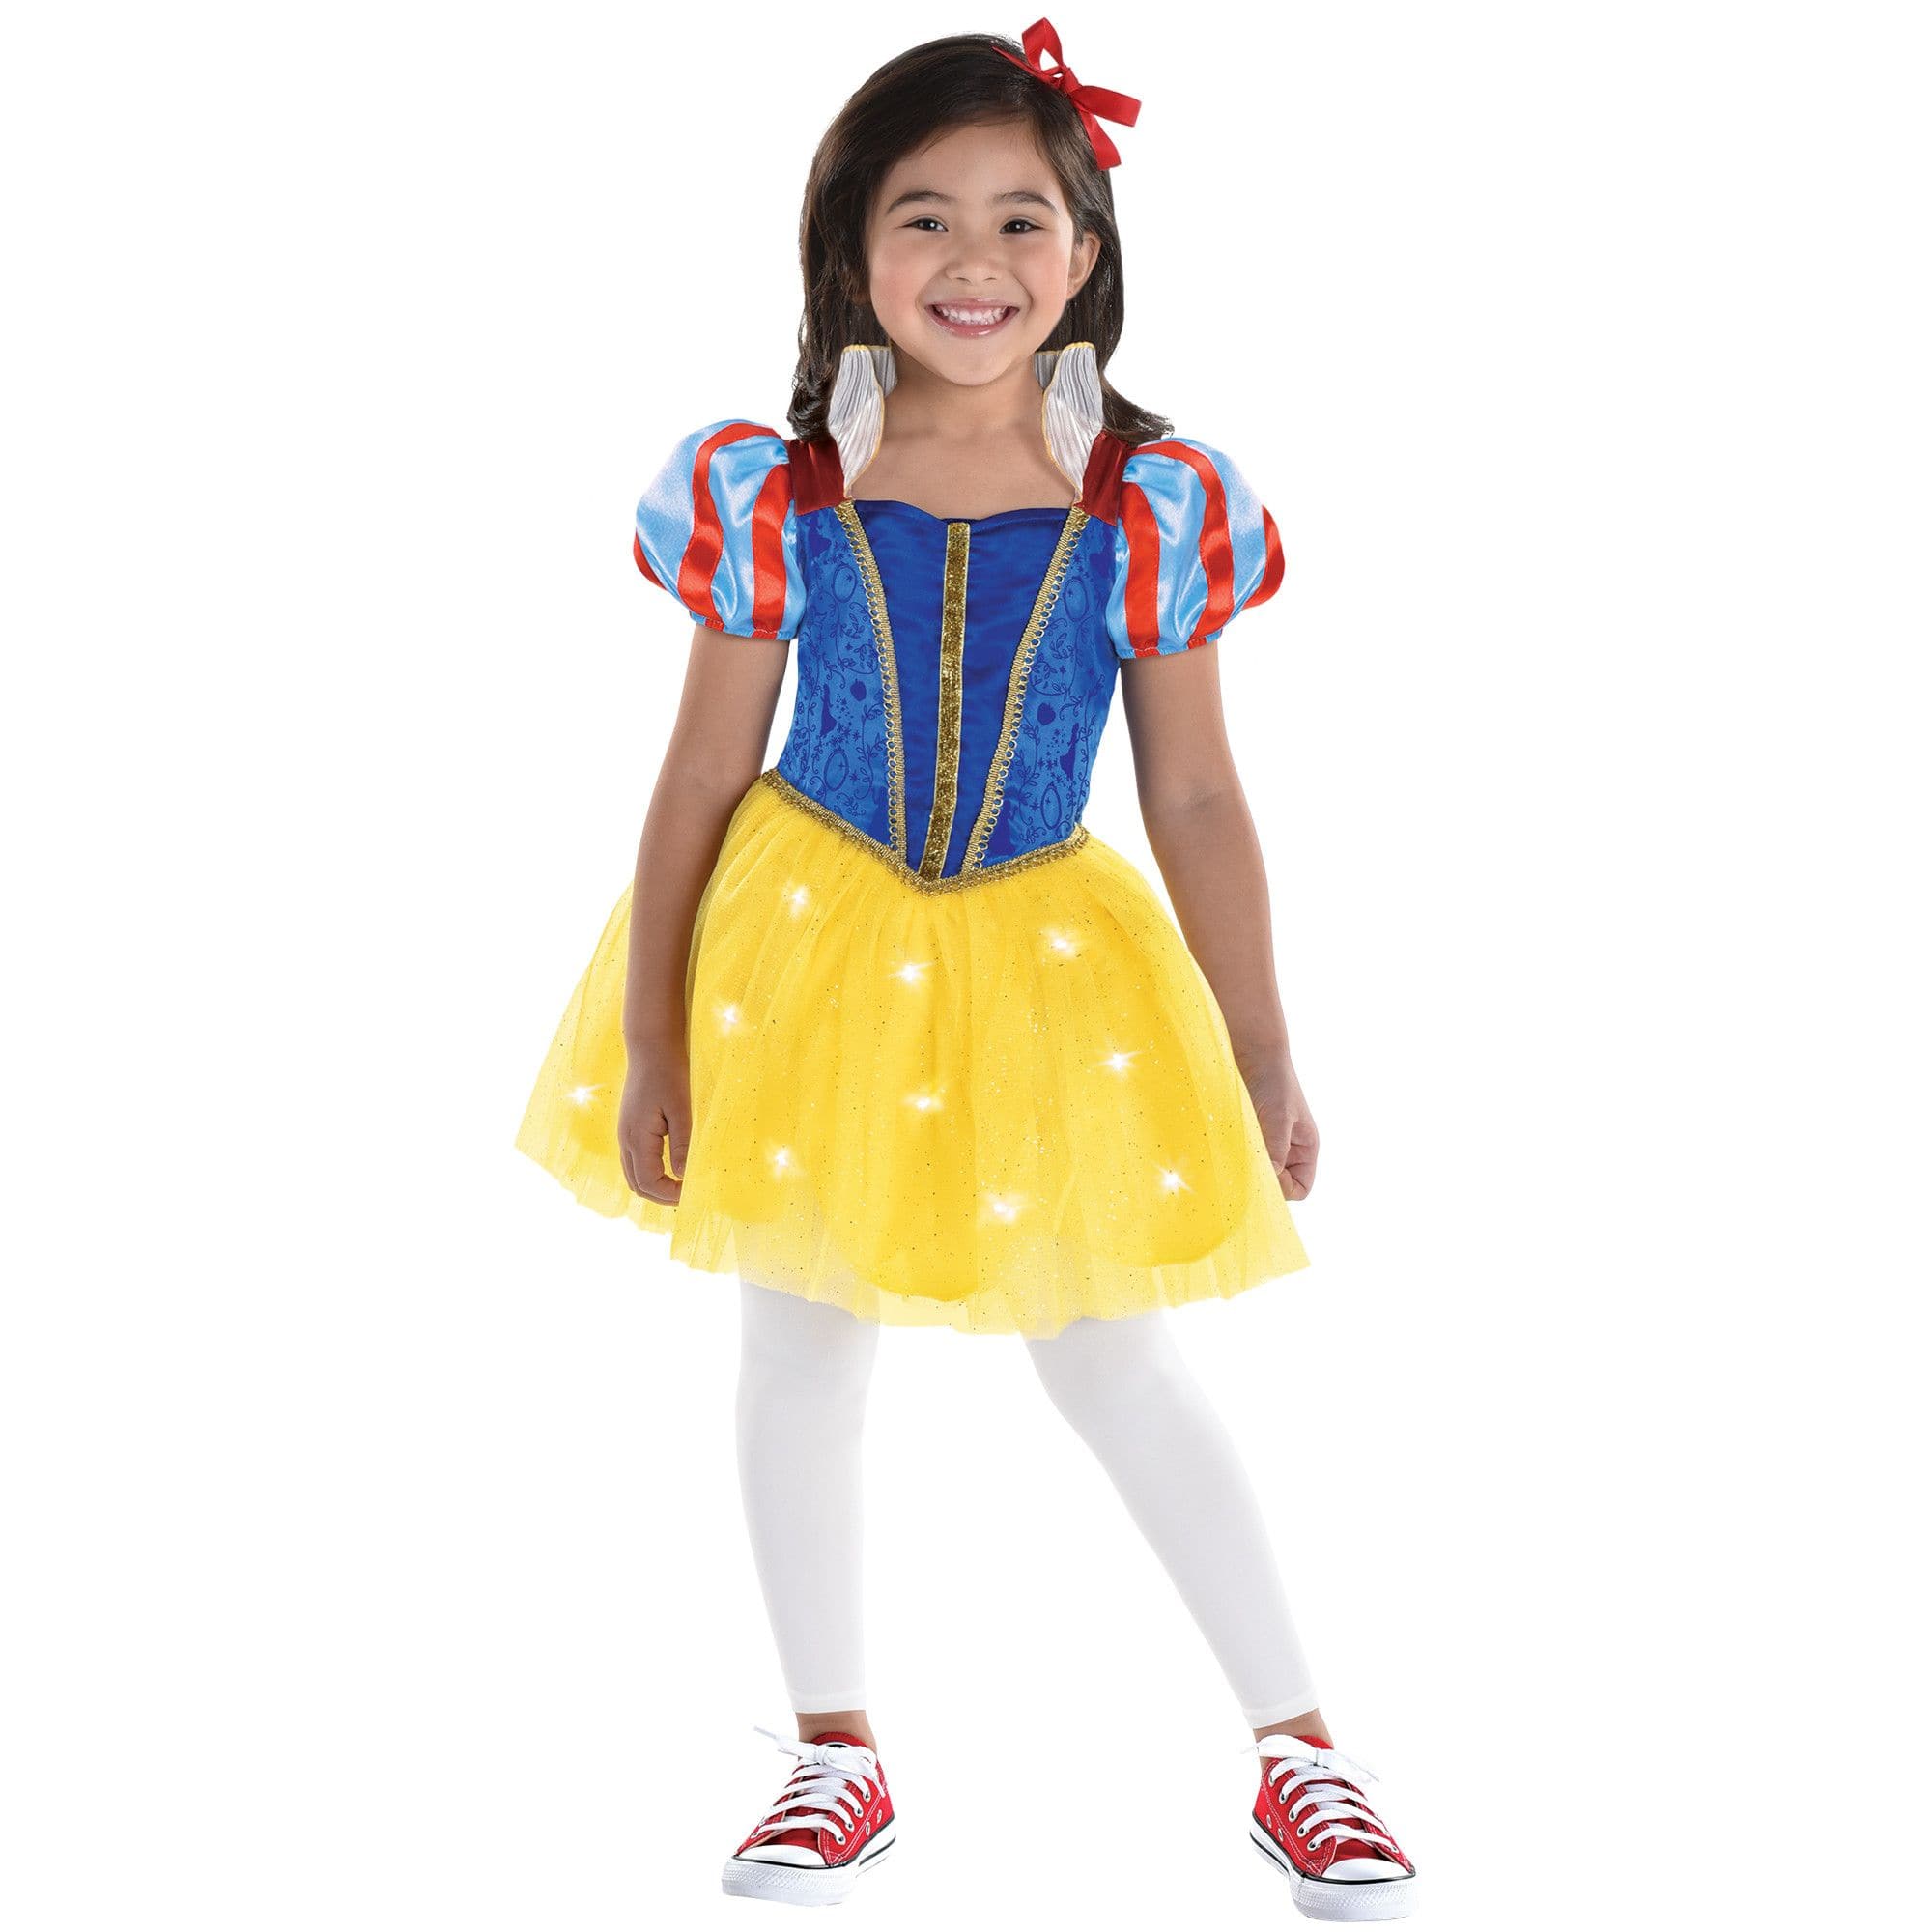 Snow White Costume 3T - Costumes